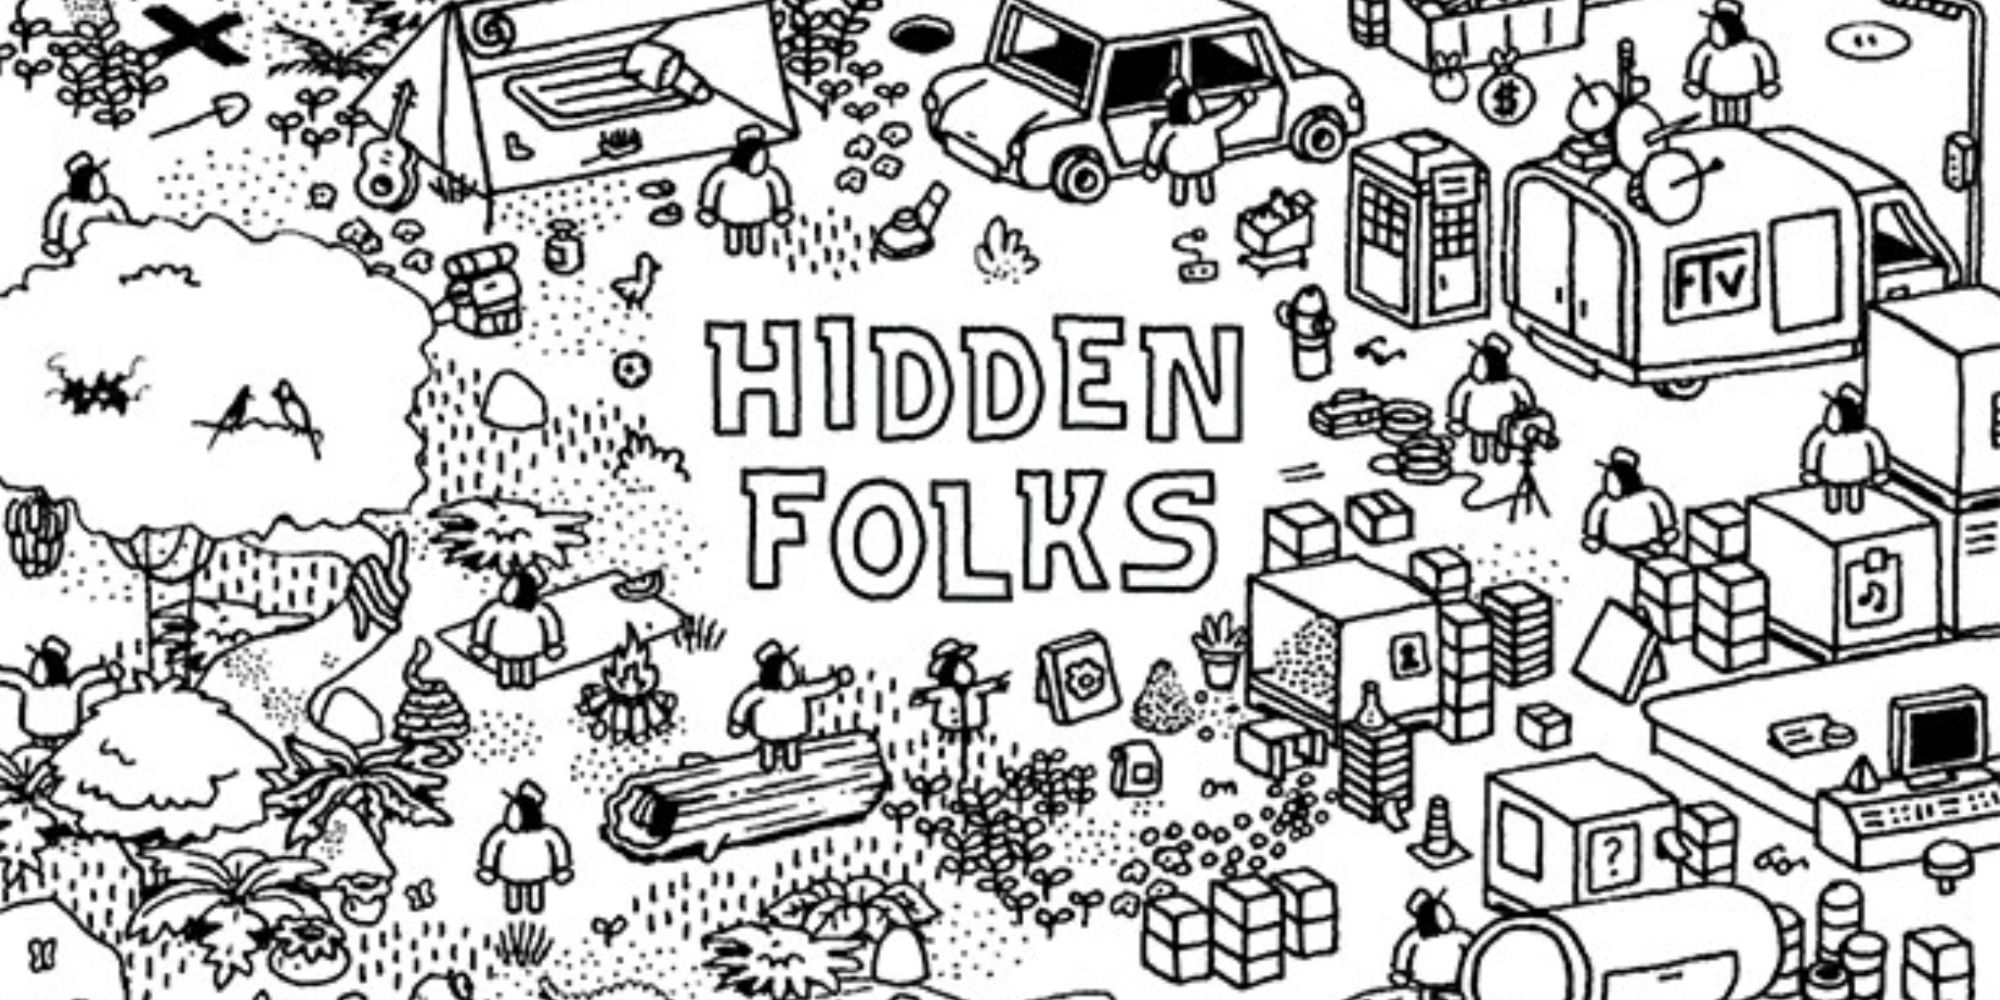 Hidden Folks Cover Image Black And White Detailed Illustrations